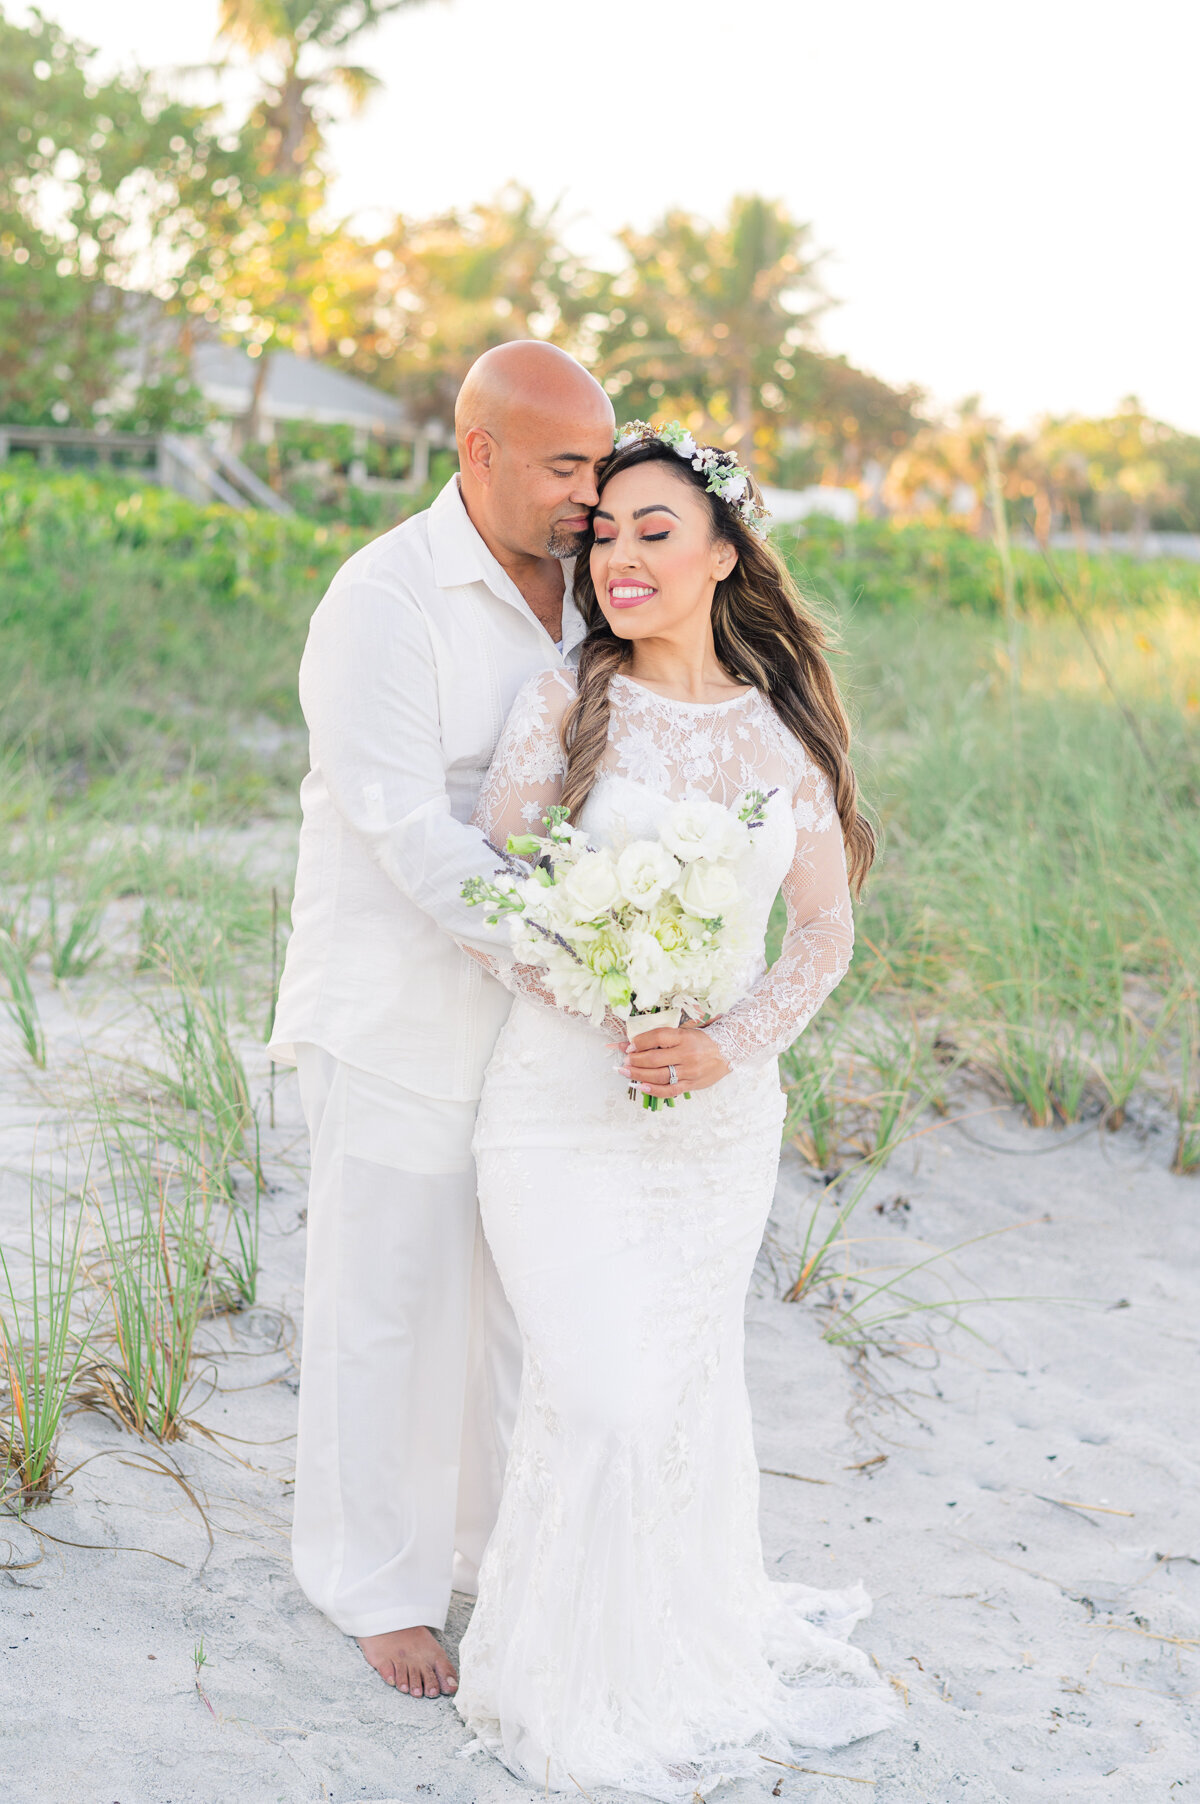 Keren + Carmelo | Melbourne Beach Wedding | Lisa Marshall Photography-15